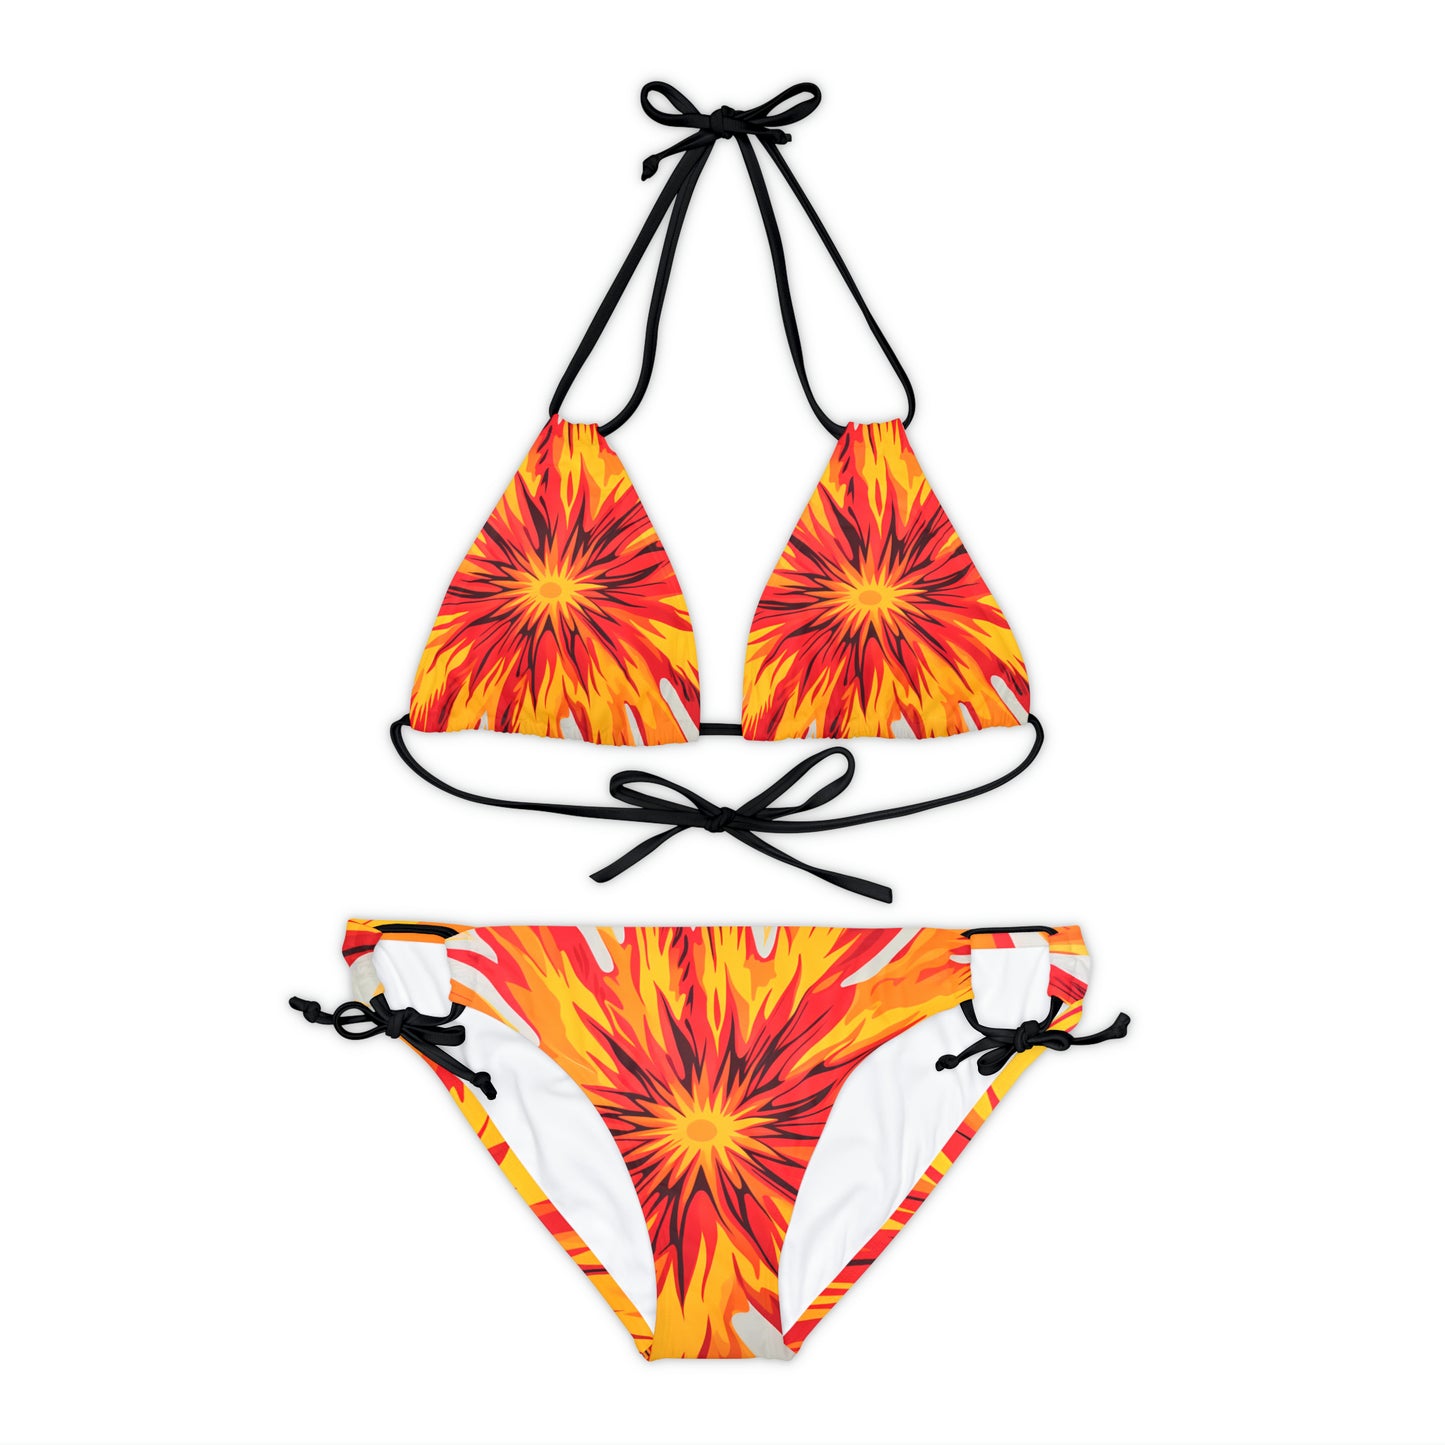 Sunburst Strappy Bikini Set